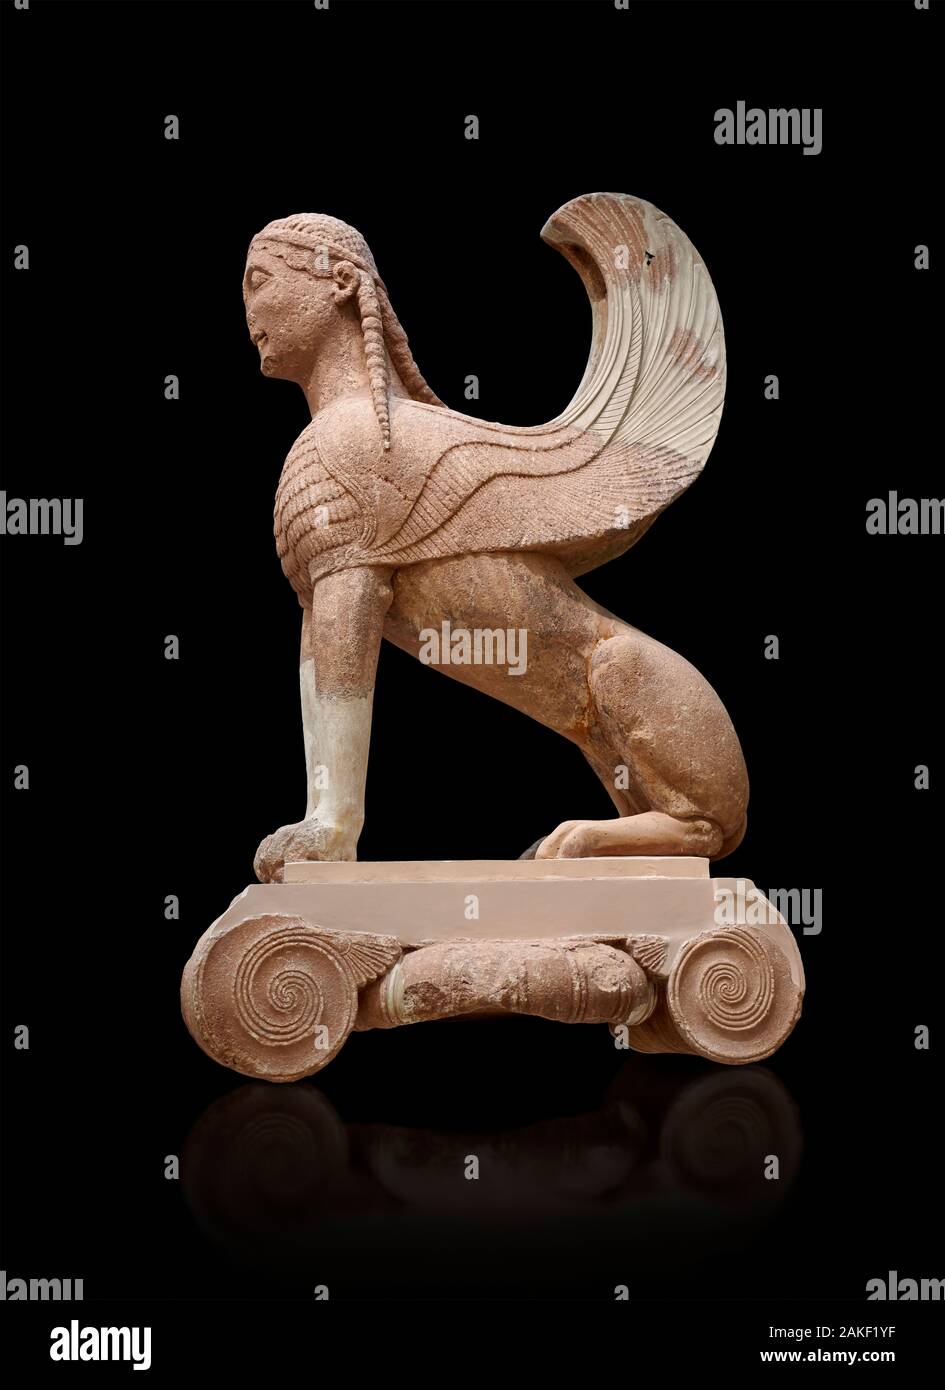 Escultura arcaica griega fotografías e imágenes de alta resolución - Alamy